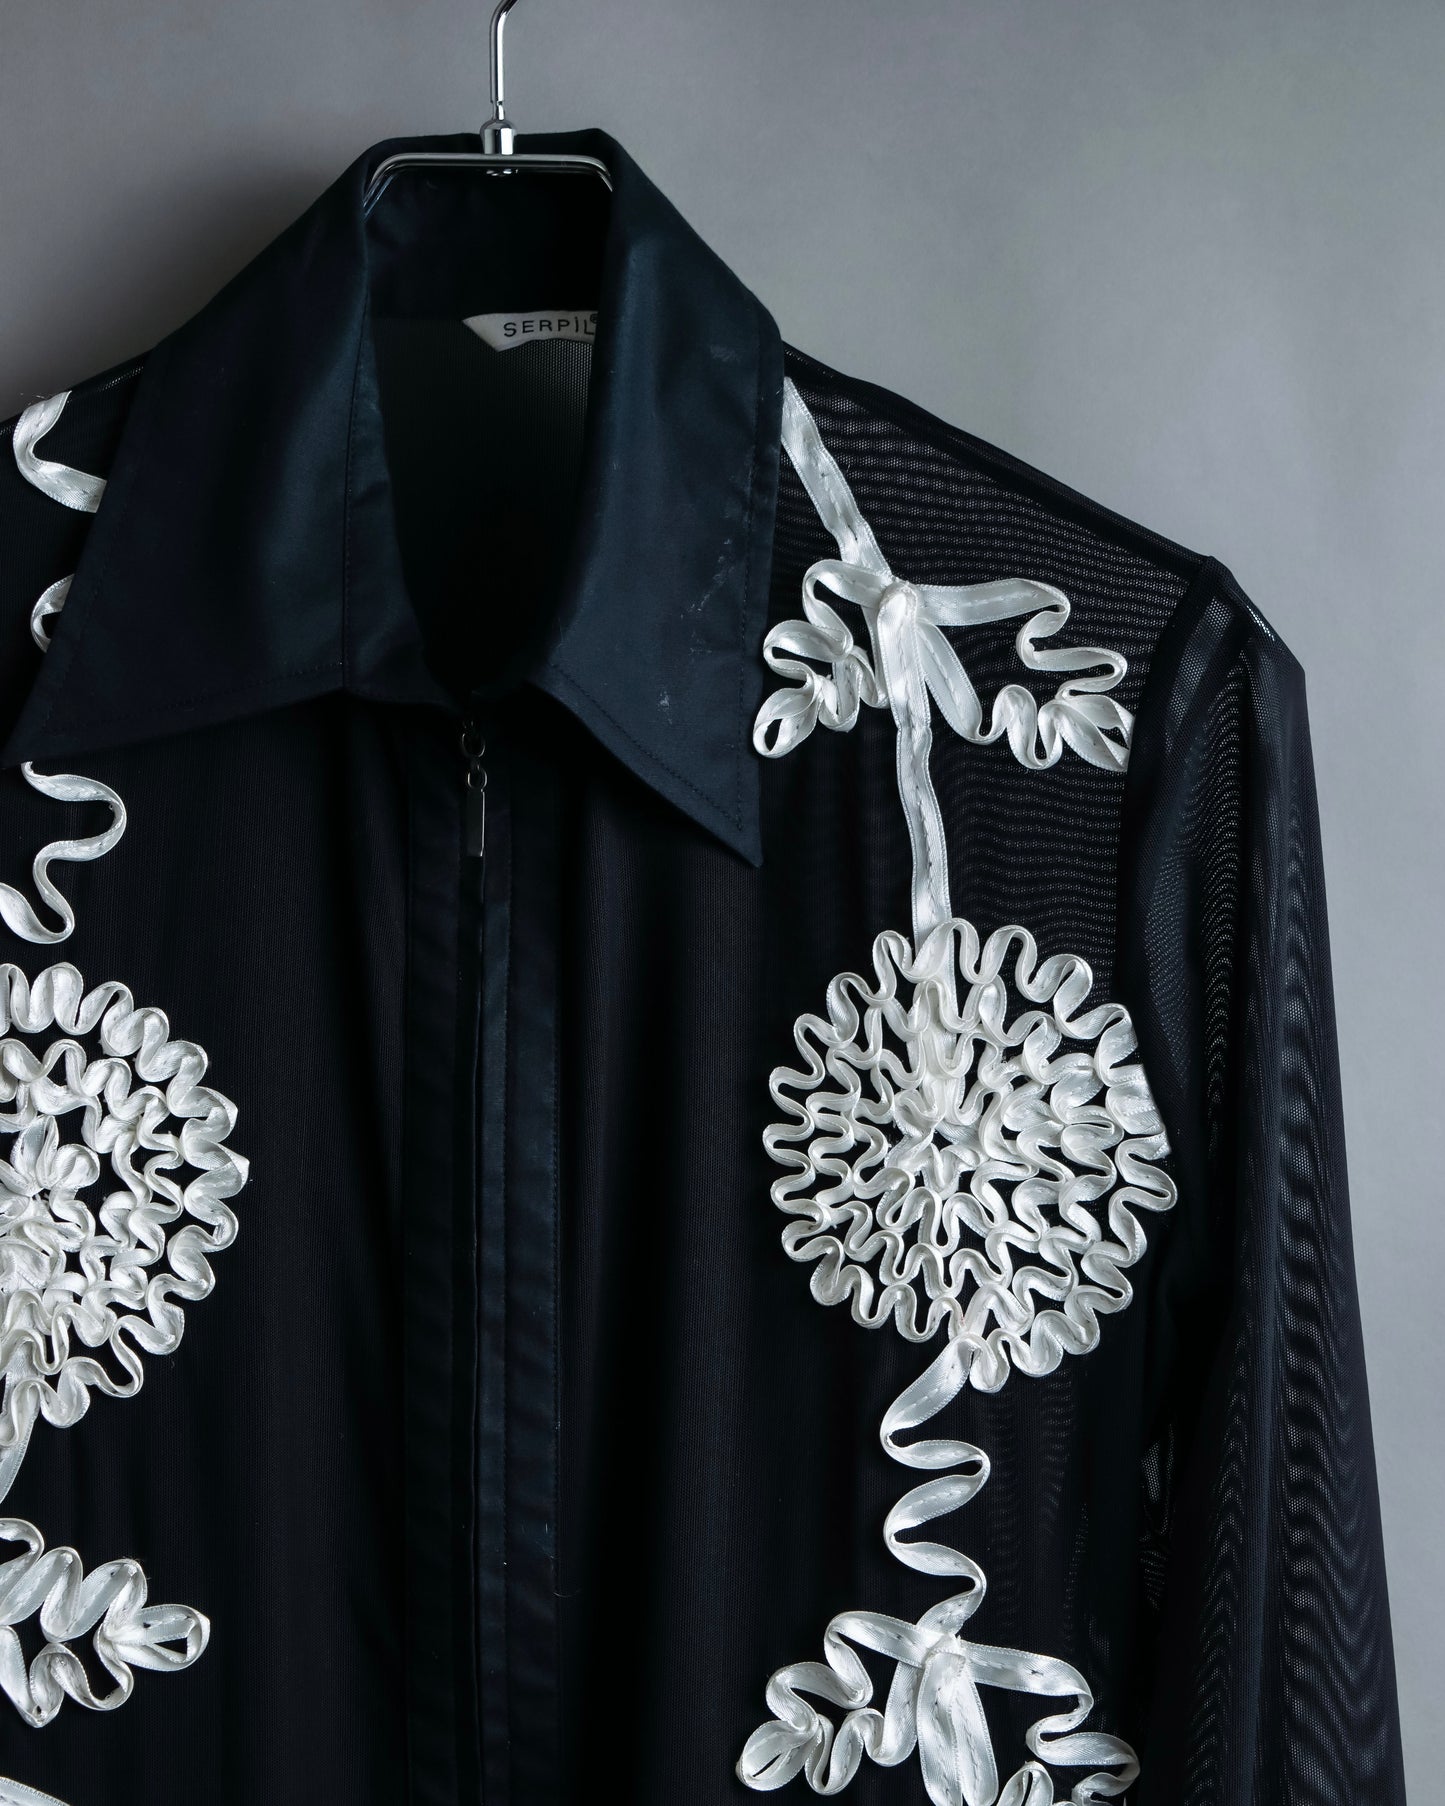 Vintage double zip ribbon flower design sheer jacket